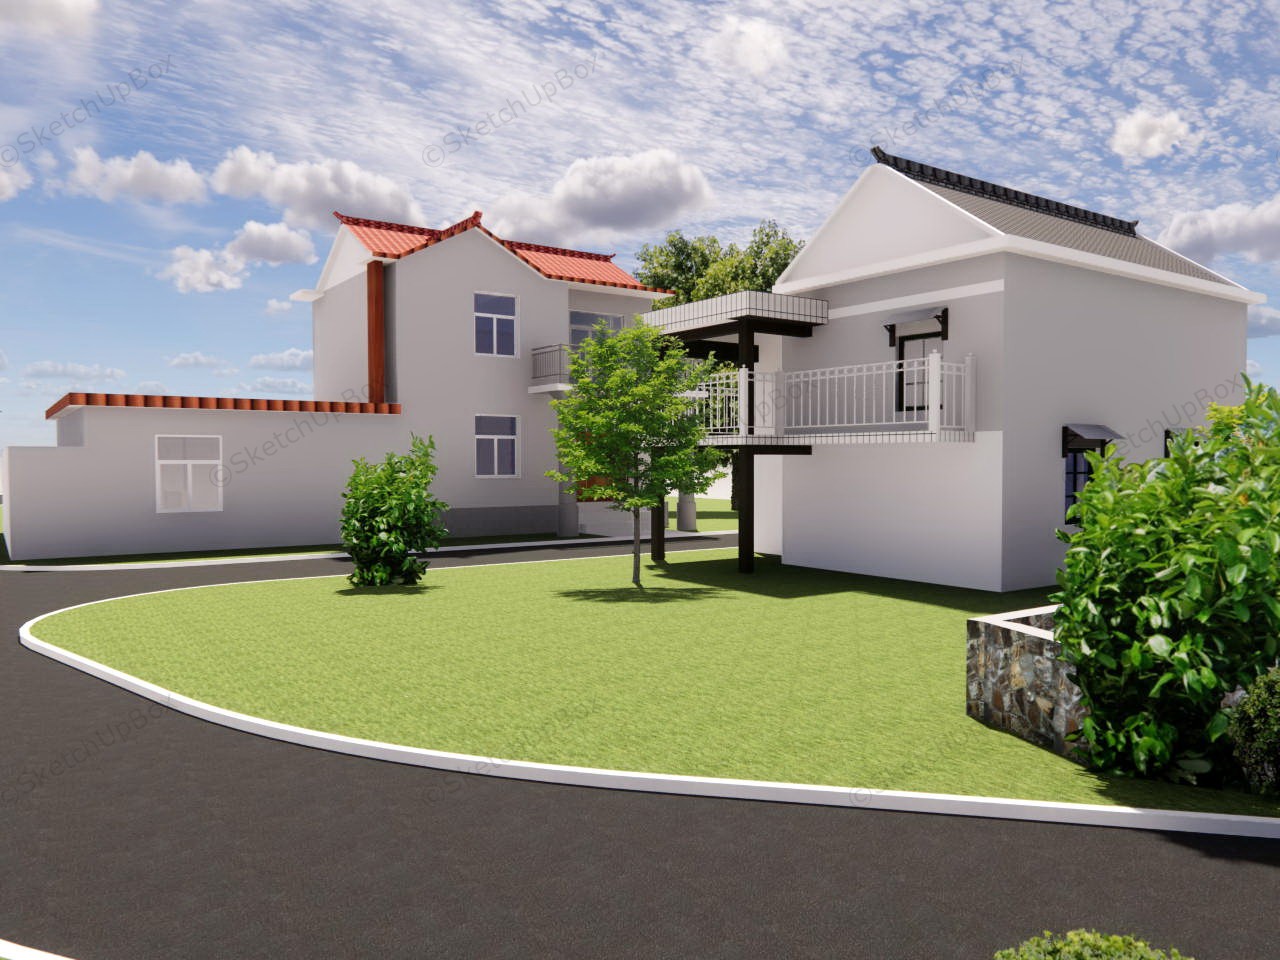 Modern House Design In Village sketchup model preview - SketchupBox